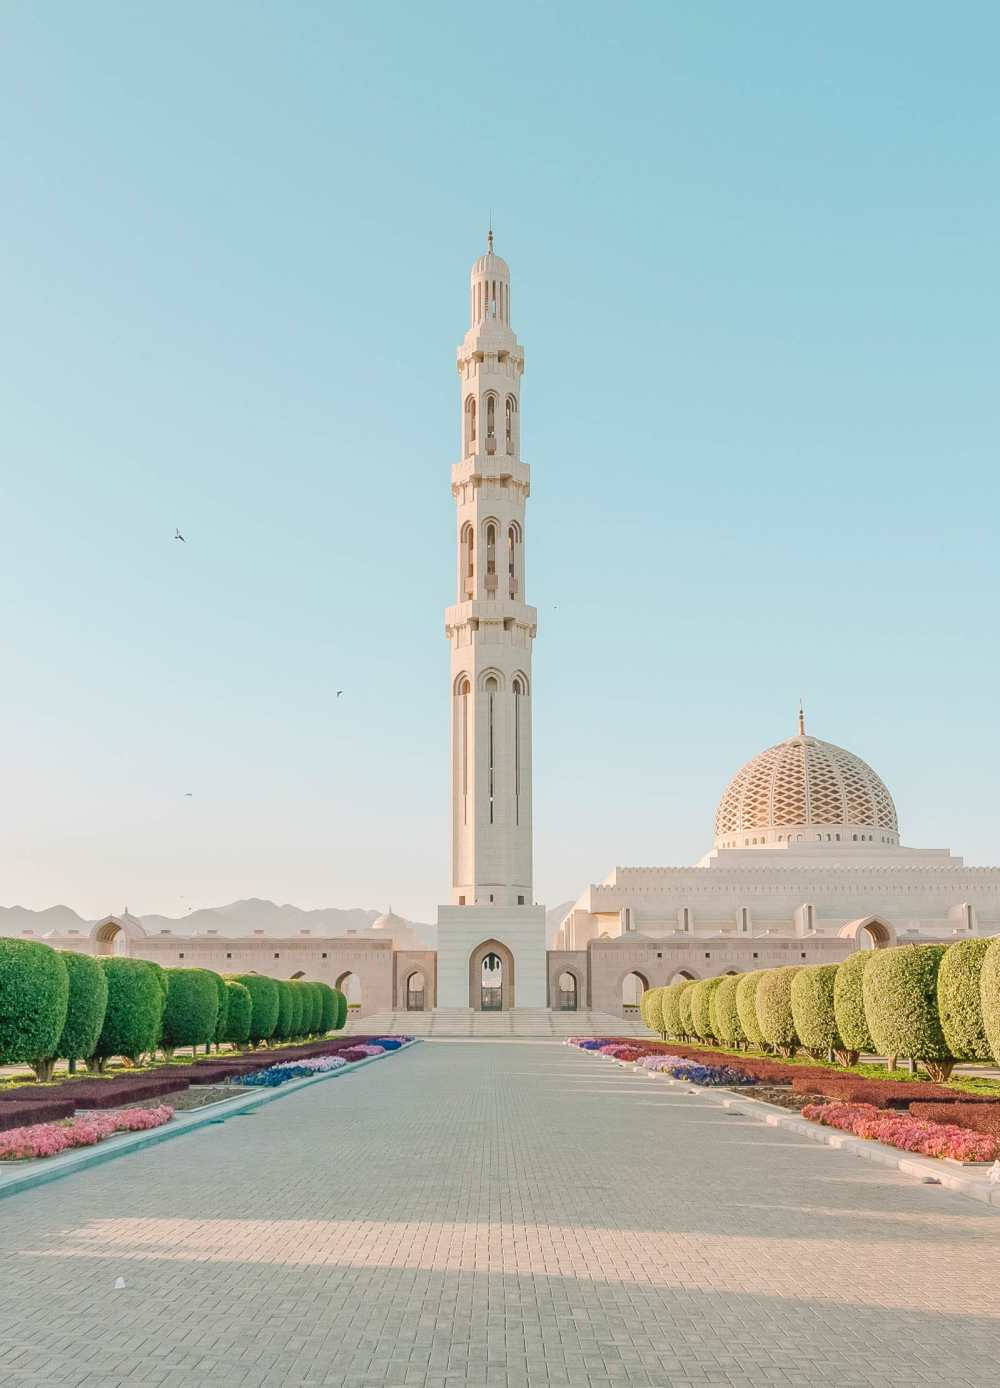 Oman Mosque Daytime View Wallpaper